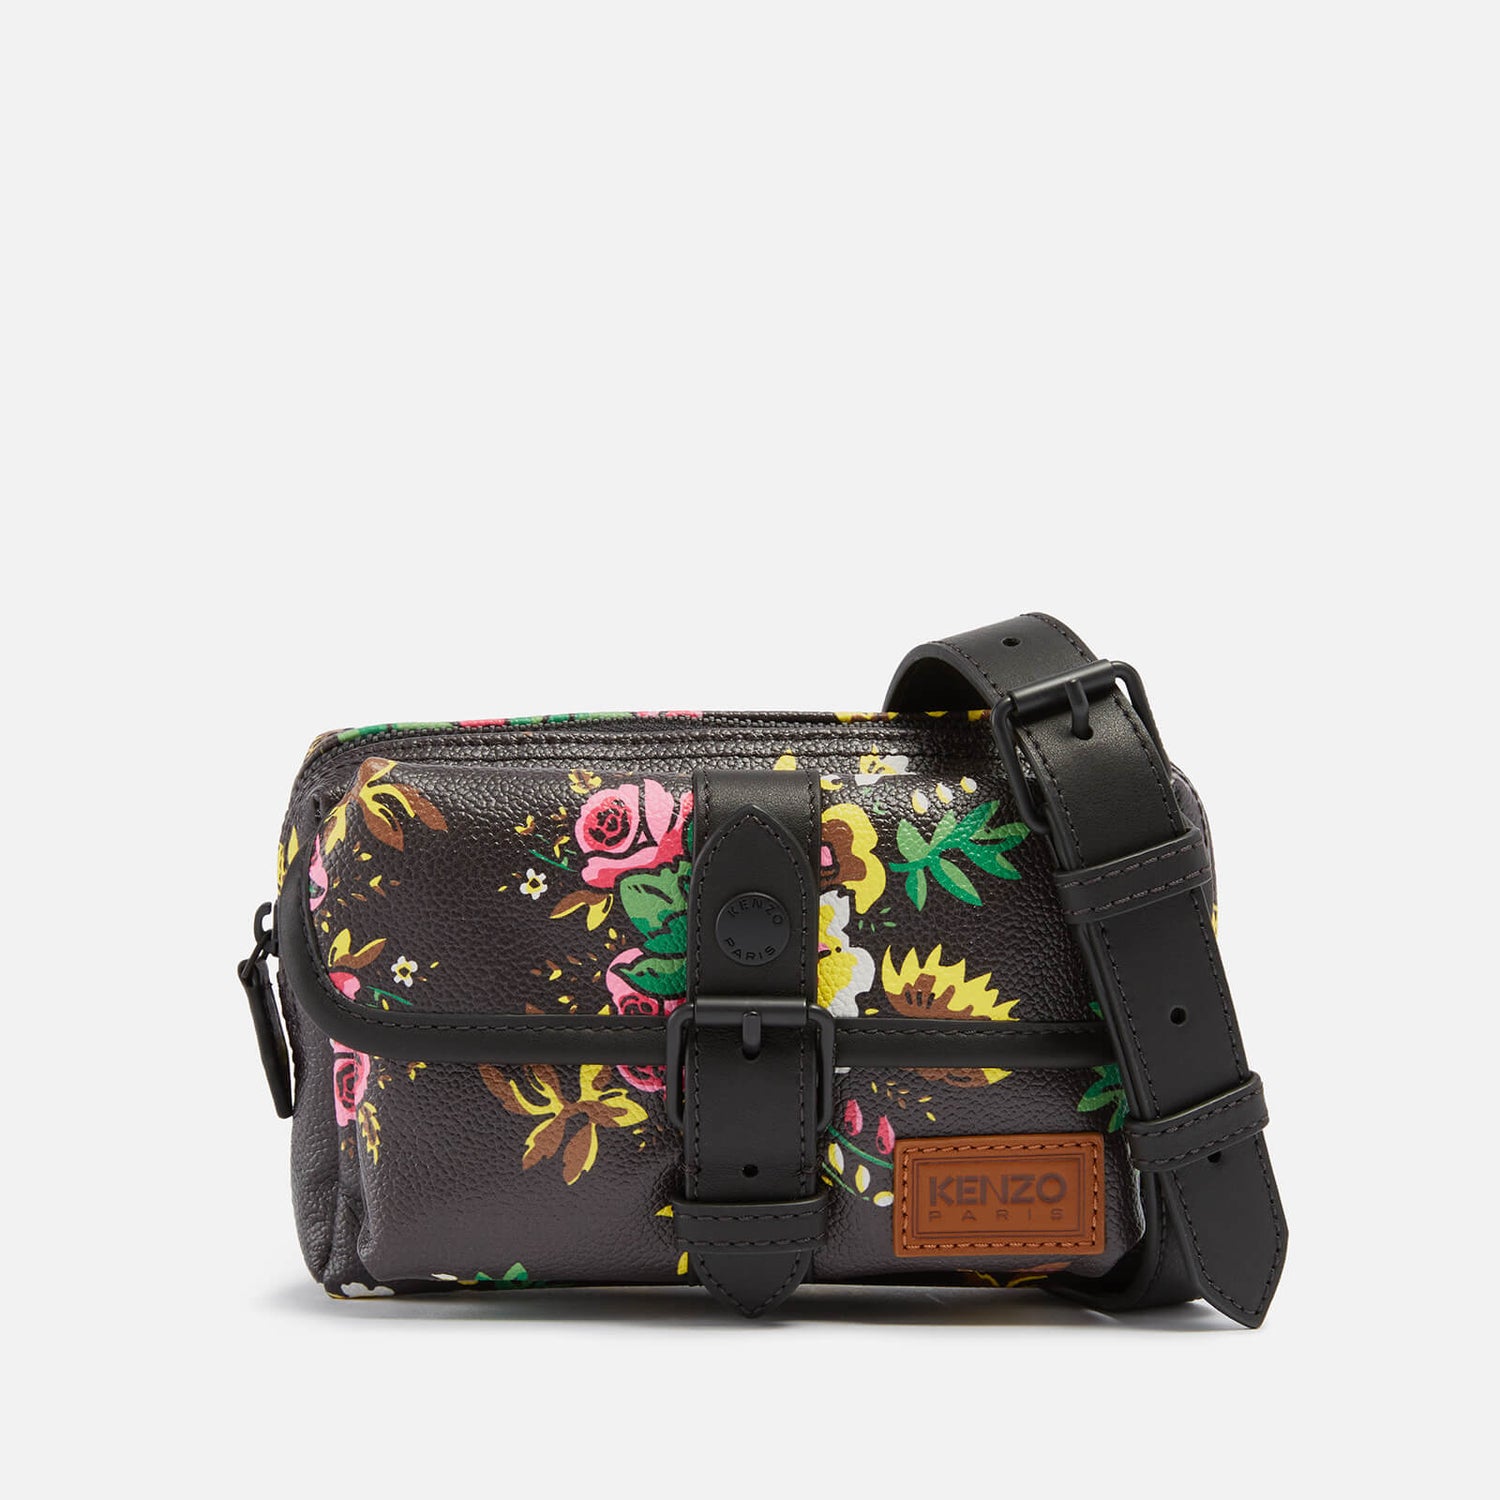 KENZO Floral-Print Faux Leather Cross Body Bag